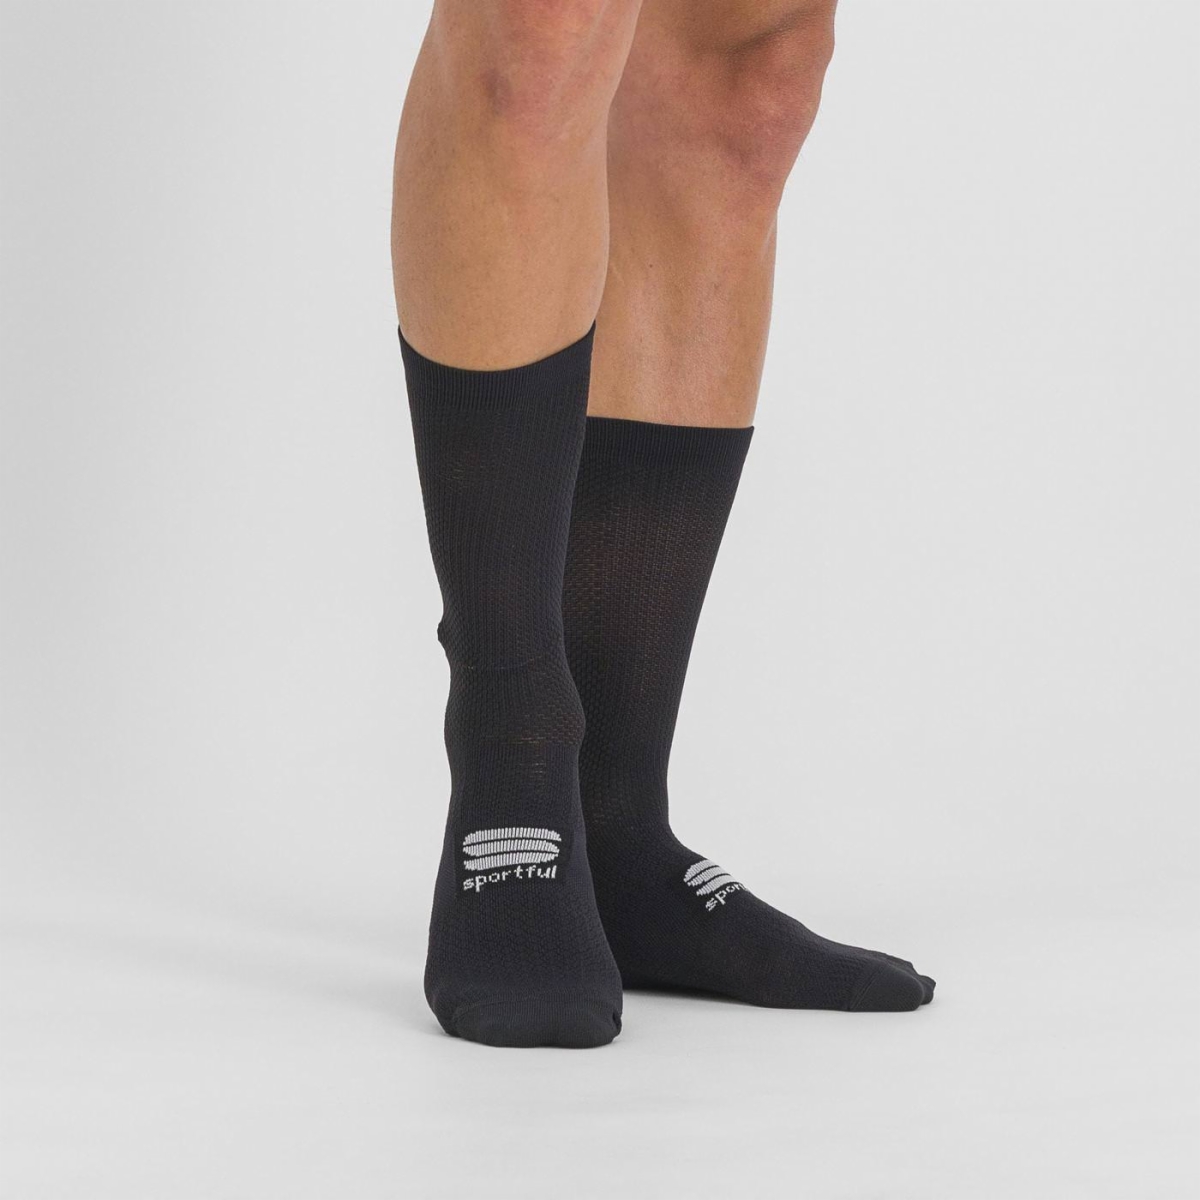 Sportful Calze Pro Socks